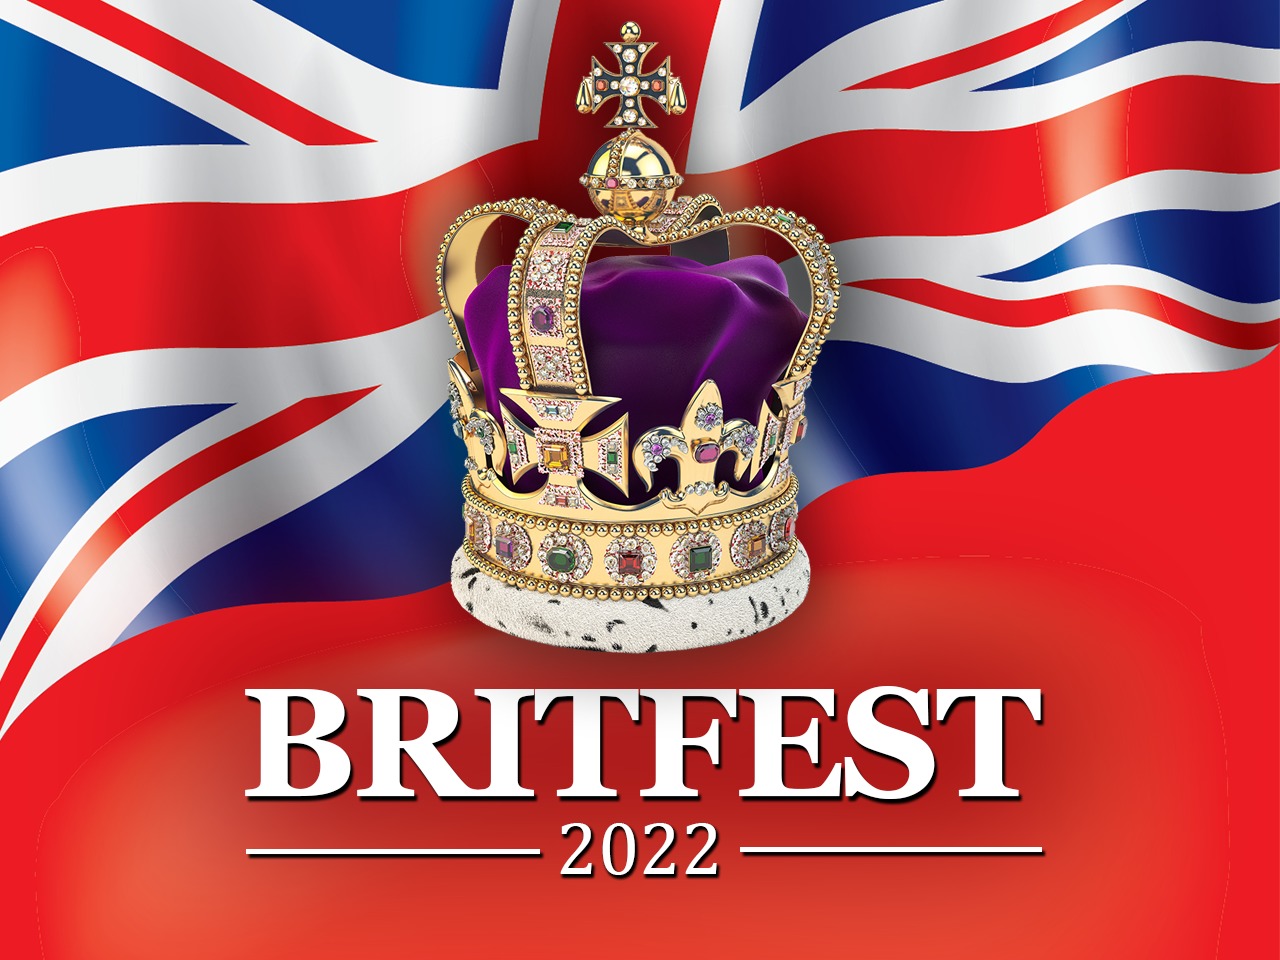 Britfest 2022 logo new